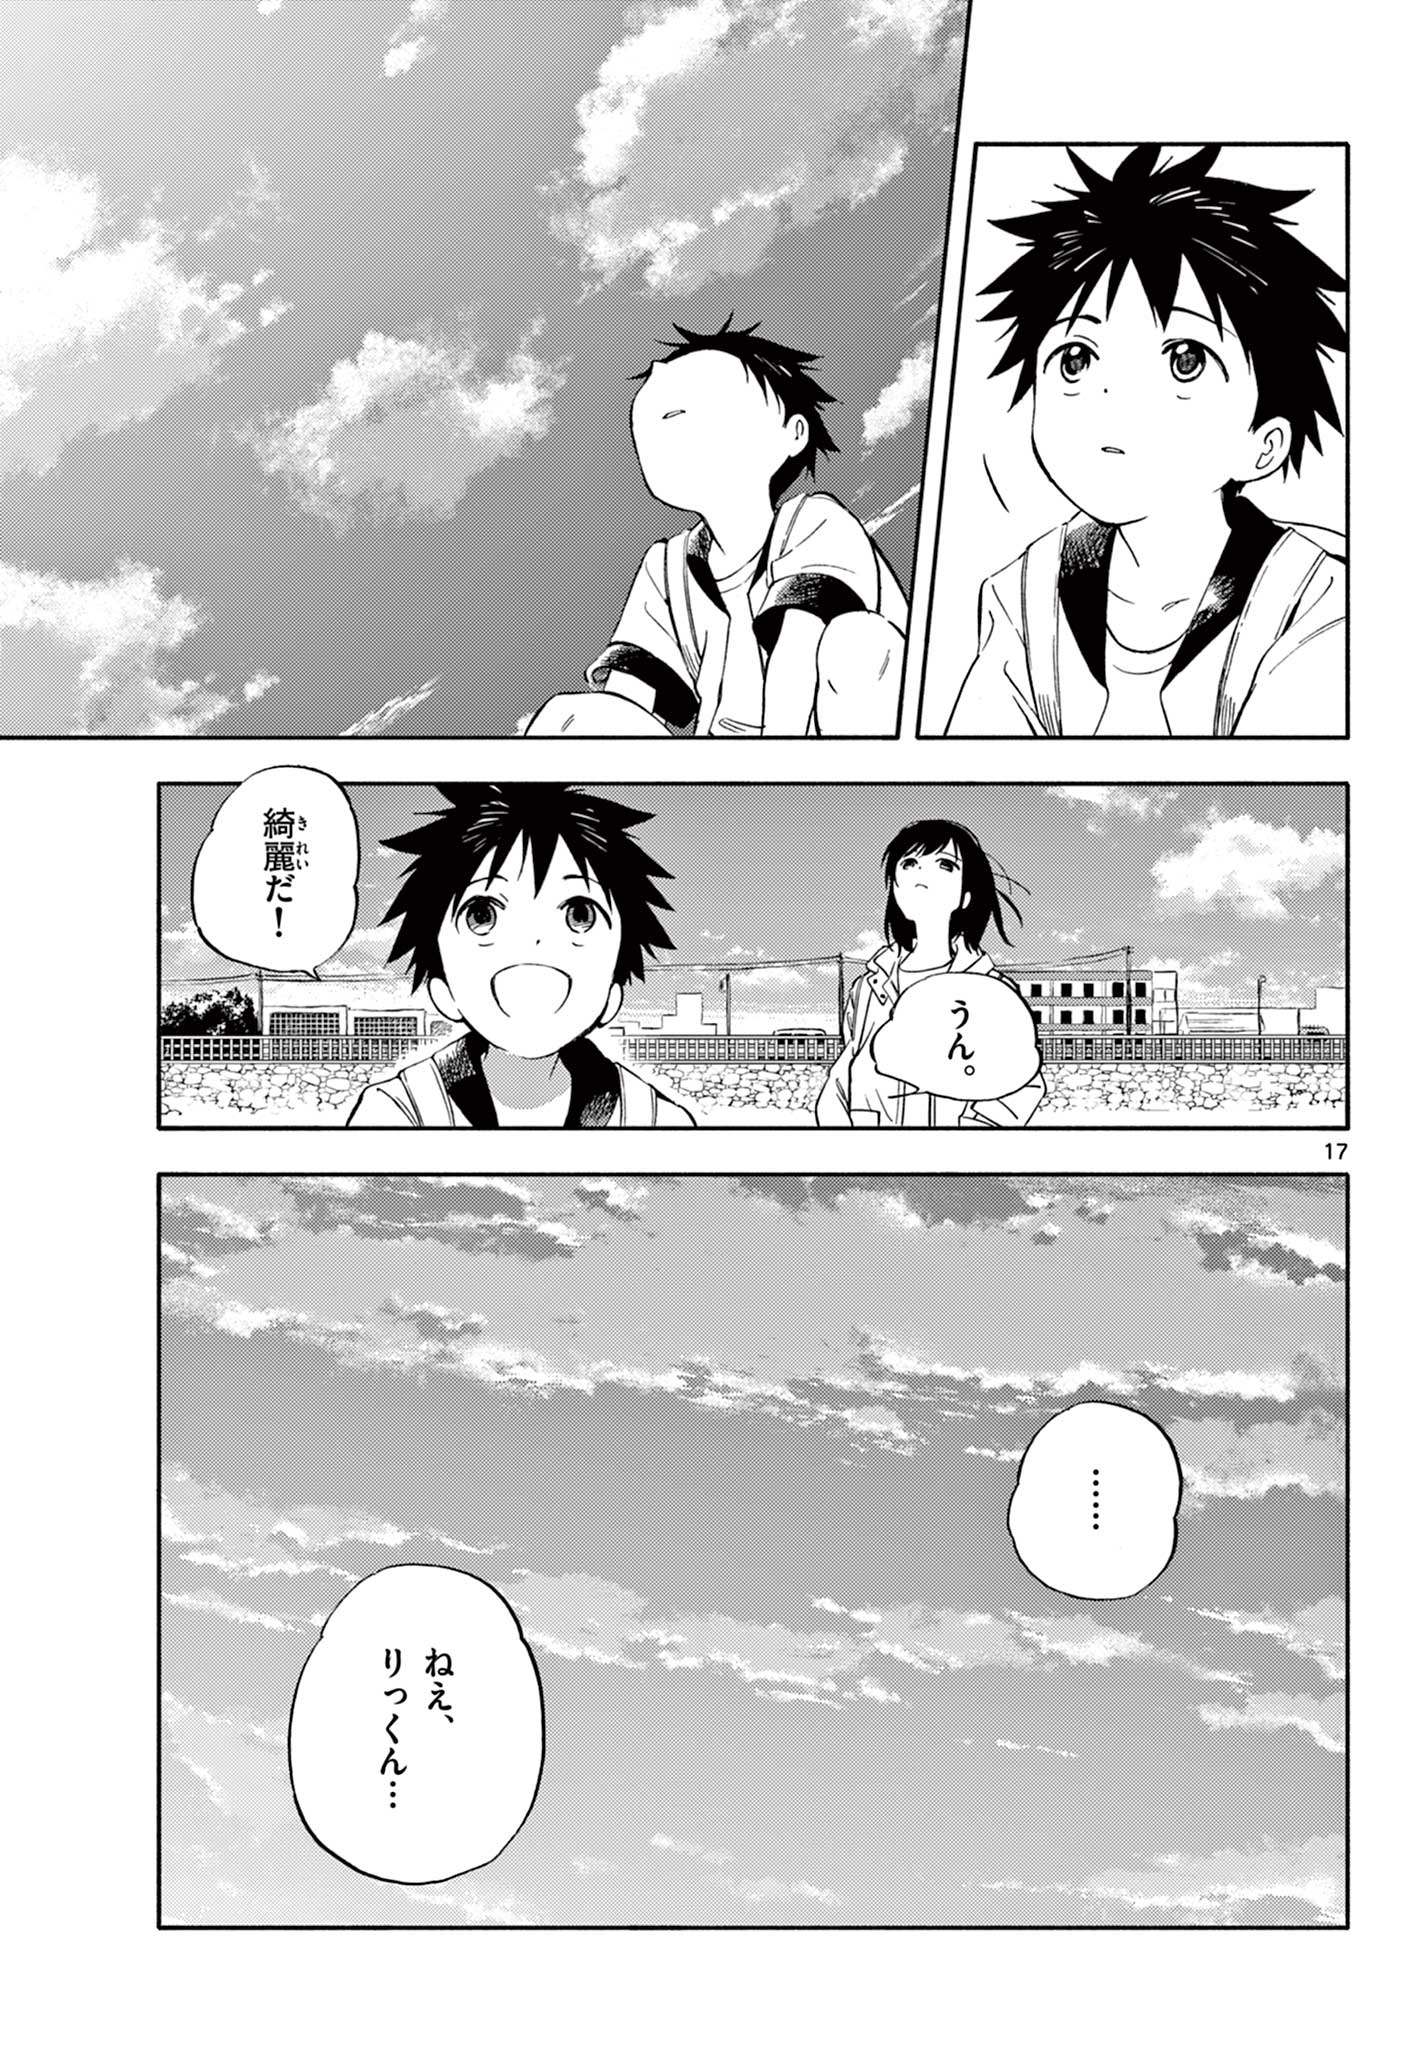 Nami no Shijima no Horizont - Chapter 14.2 - Page 5